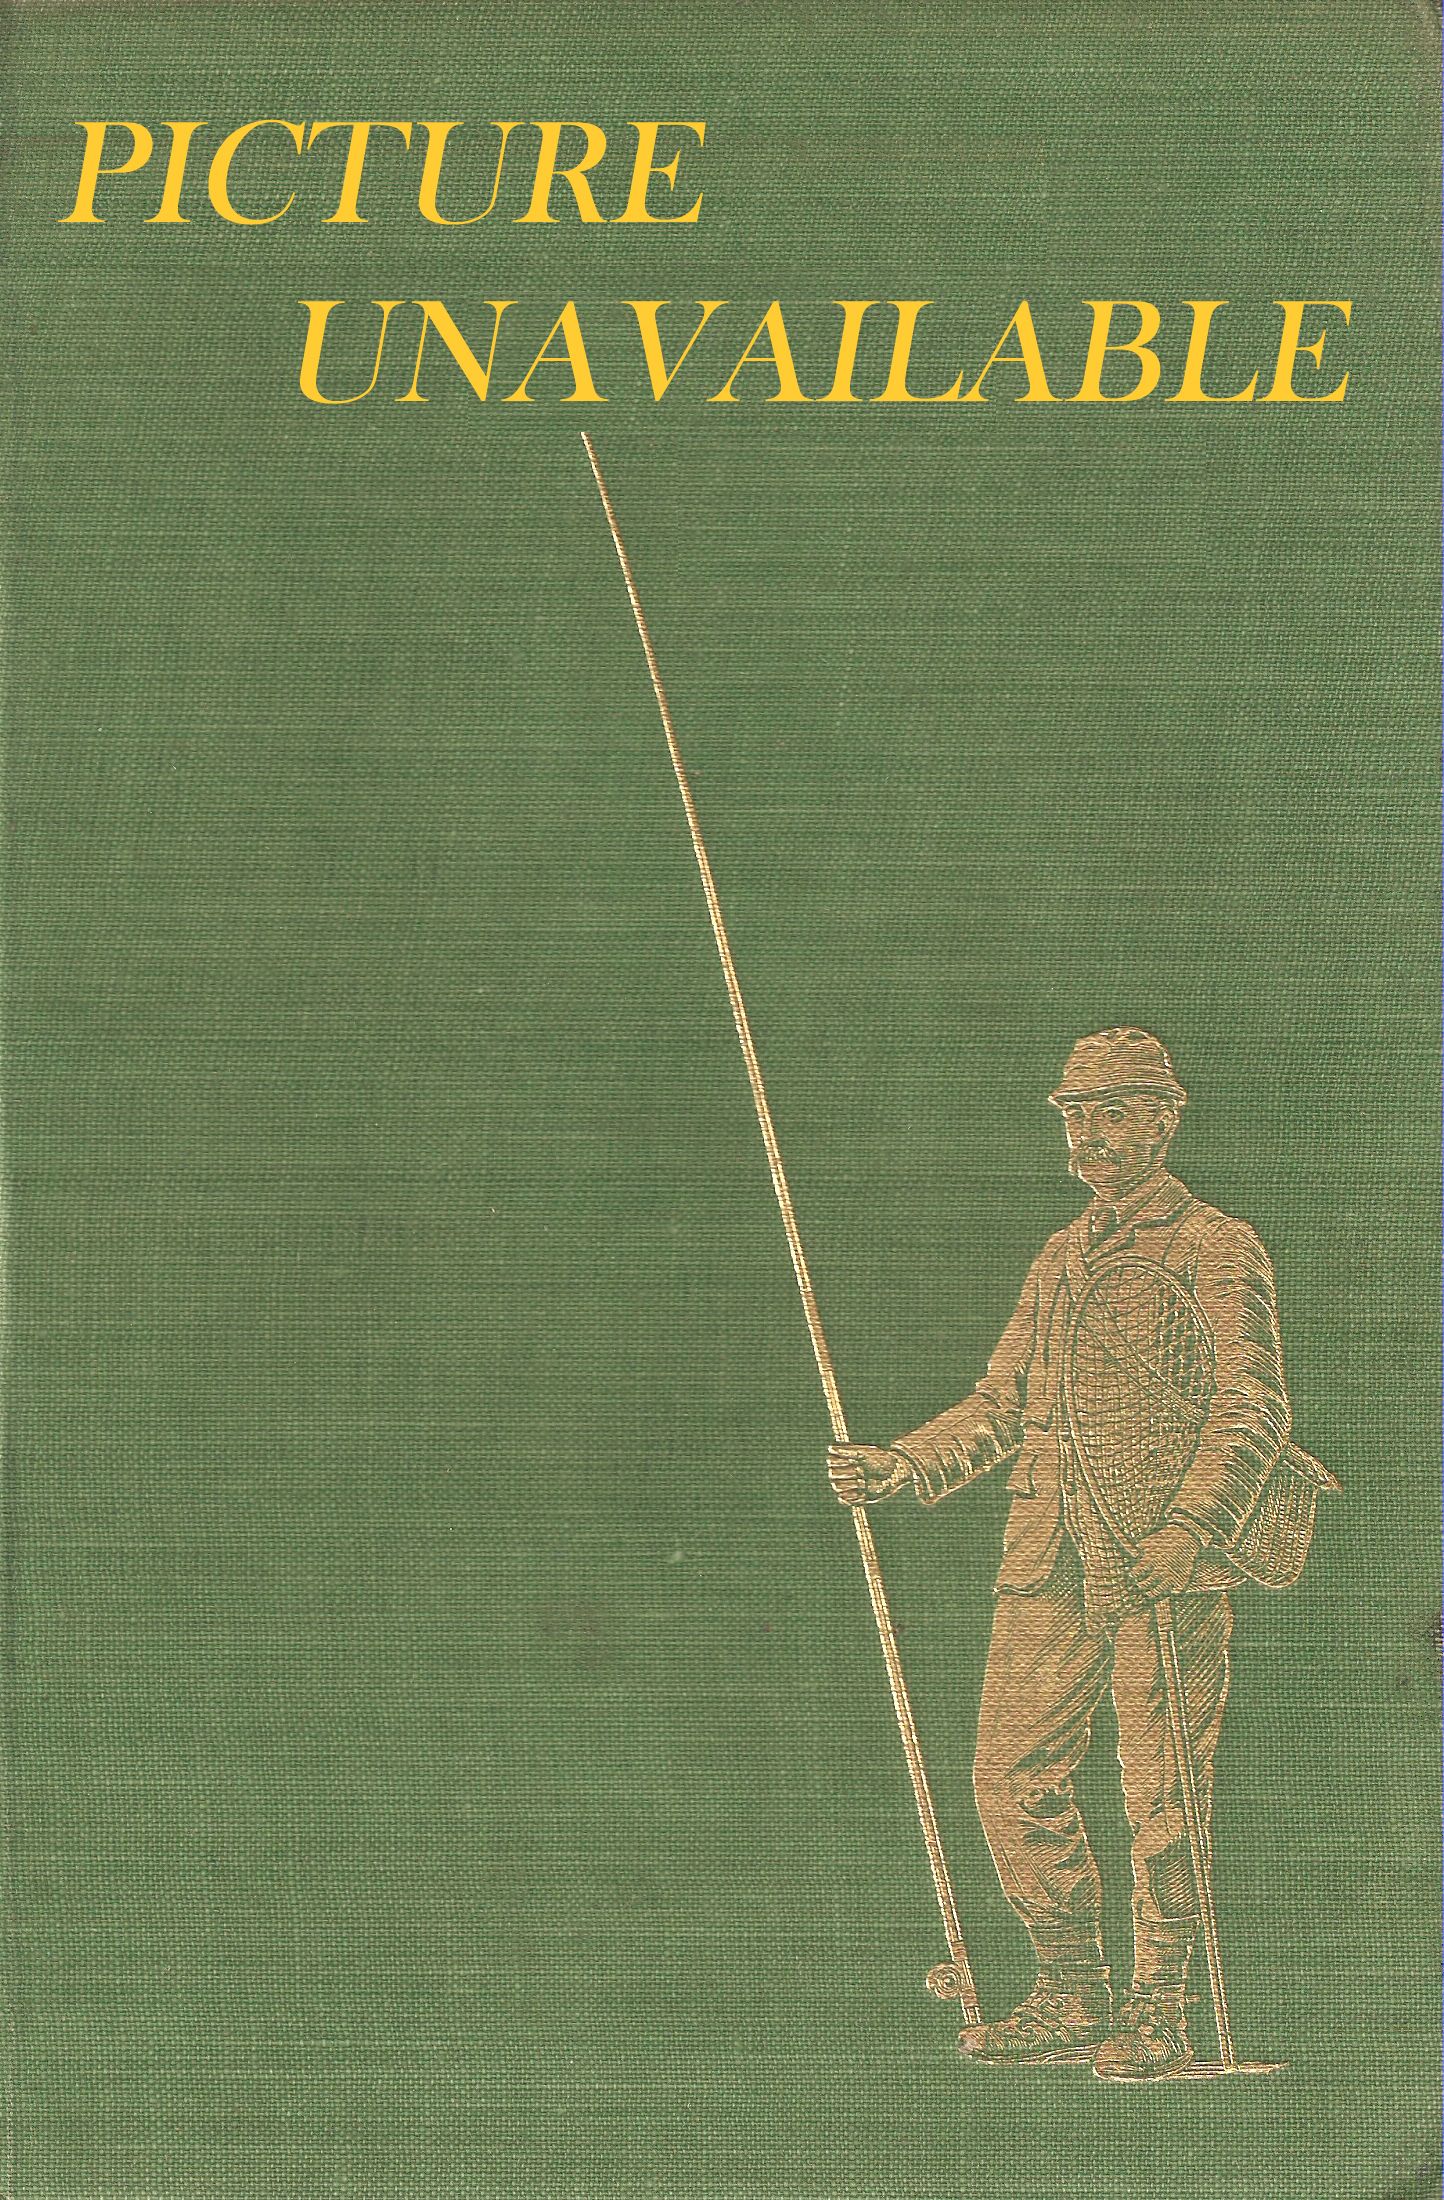 CREEL: A FISHING MAGAZINE. Volume 4, number 7. January 1967.